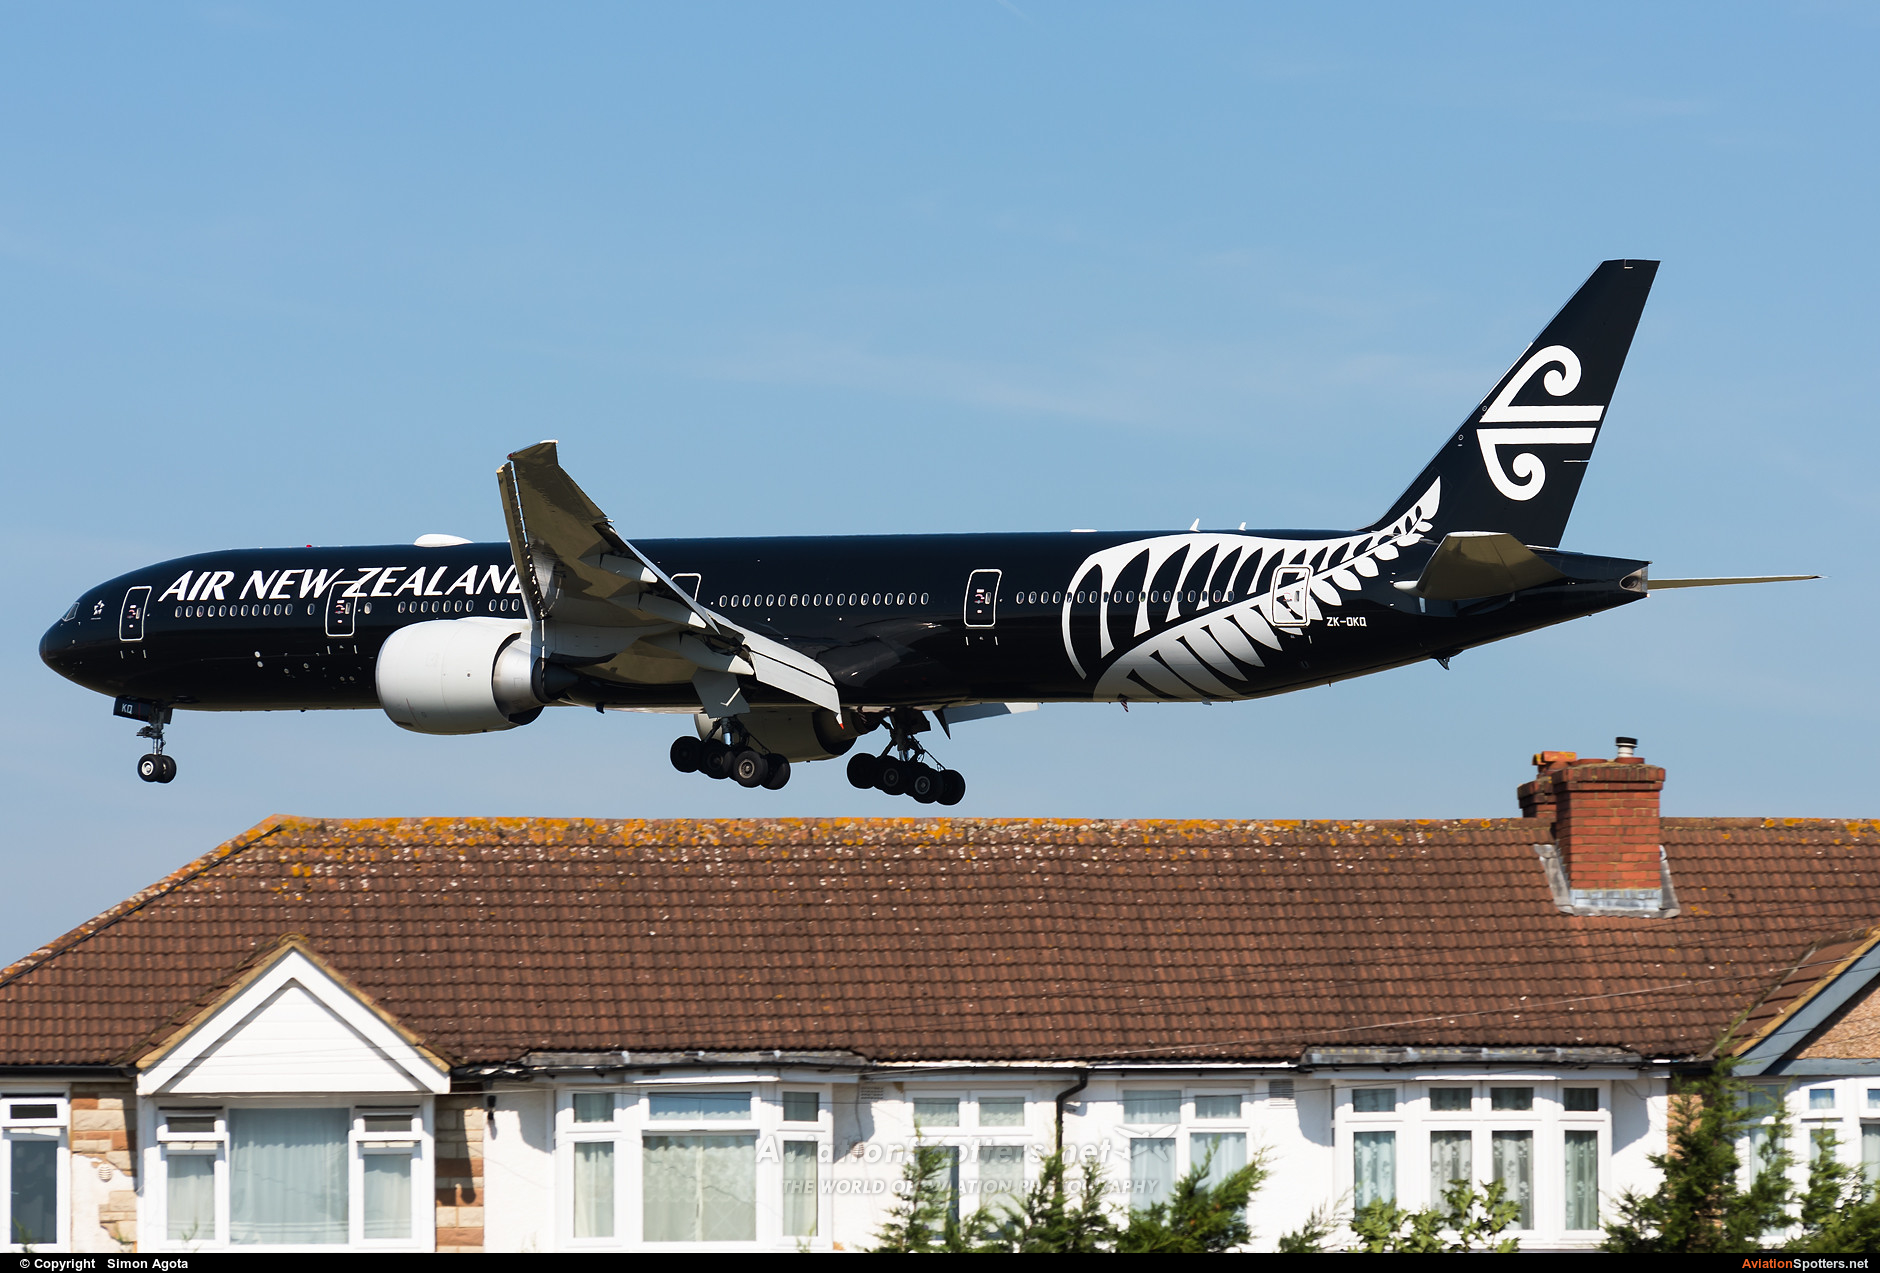 Air New Zealand  -  777-300ER  (ZK-OKQ) By Simon Agota (goti80)